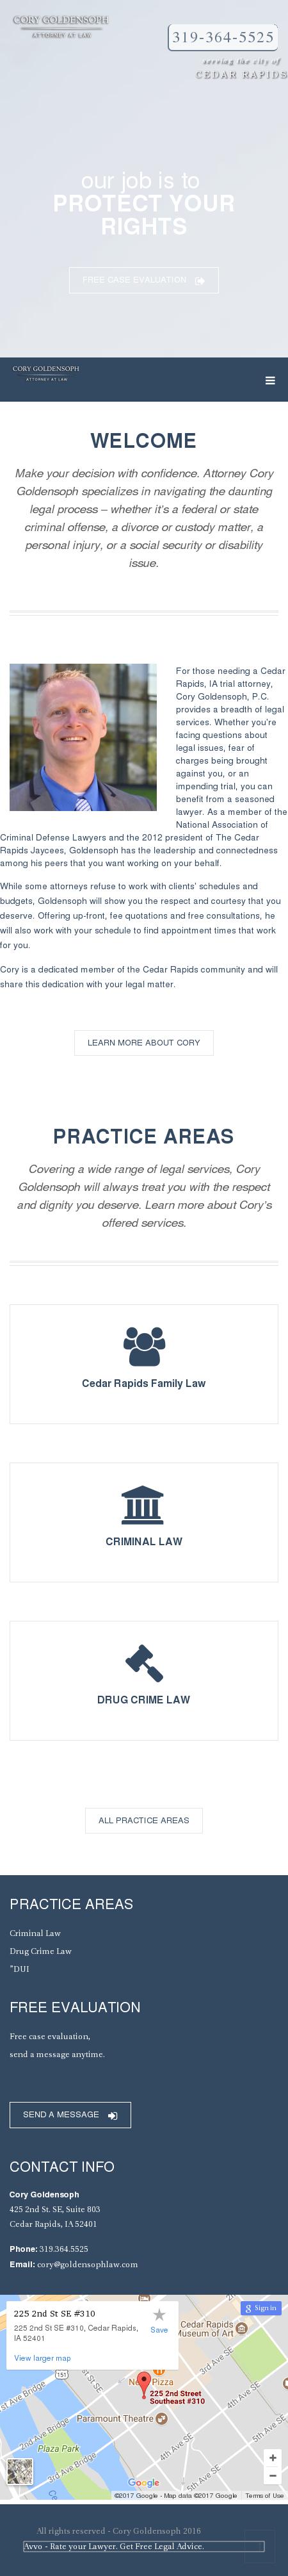 Cory Goldensoph. P.C. - Cedar Rapids IA Lawyers